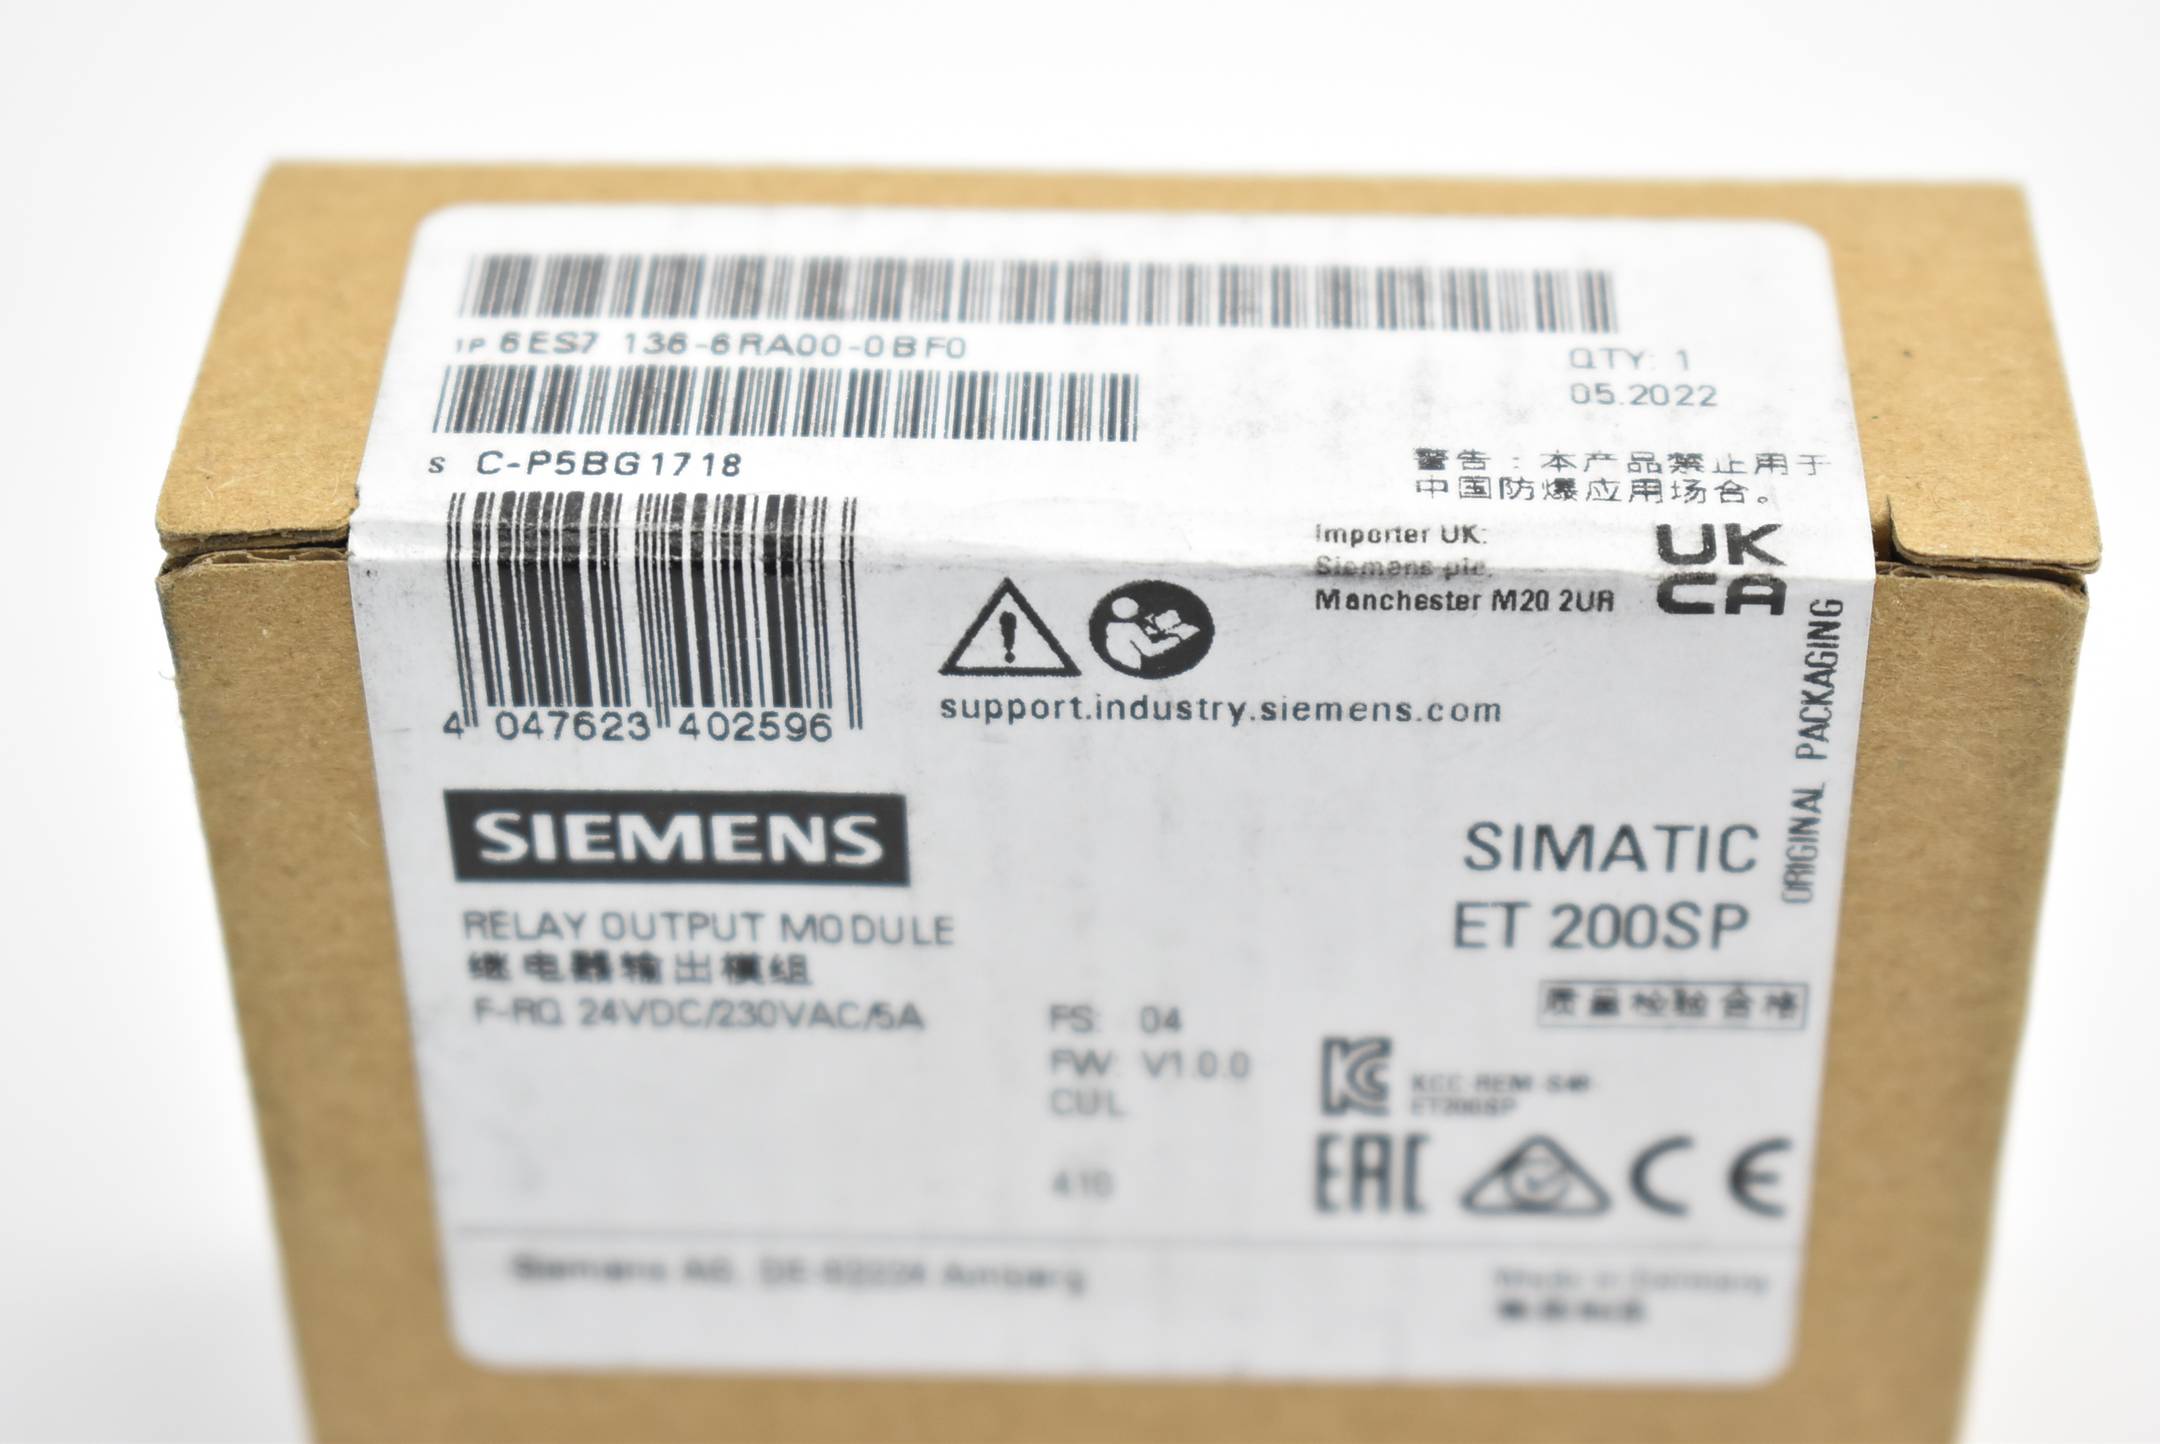 Siemens simatic DP ET200SP 6ES7 136-6RA00-0BF0 ( 6ES7136-6RA00-0BF0 )